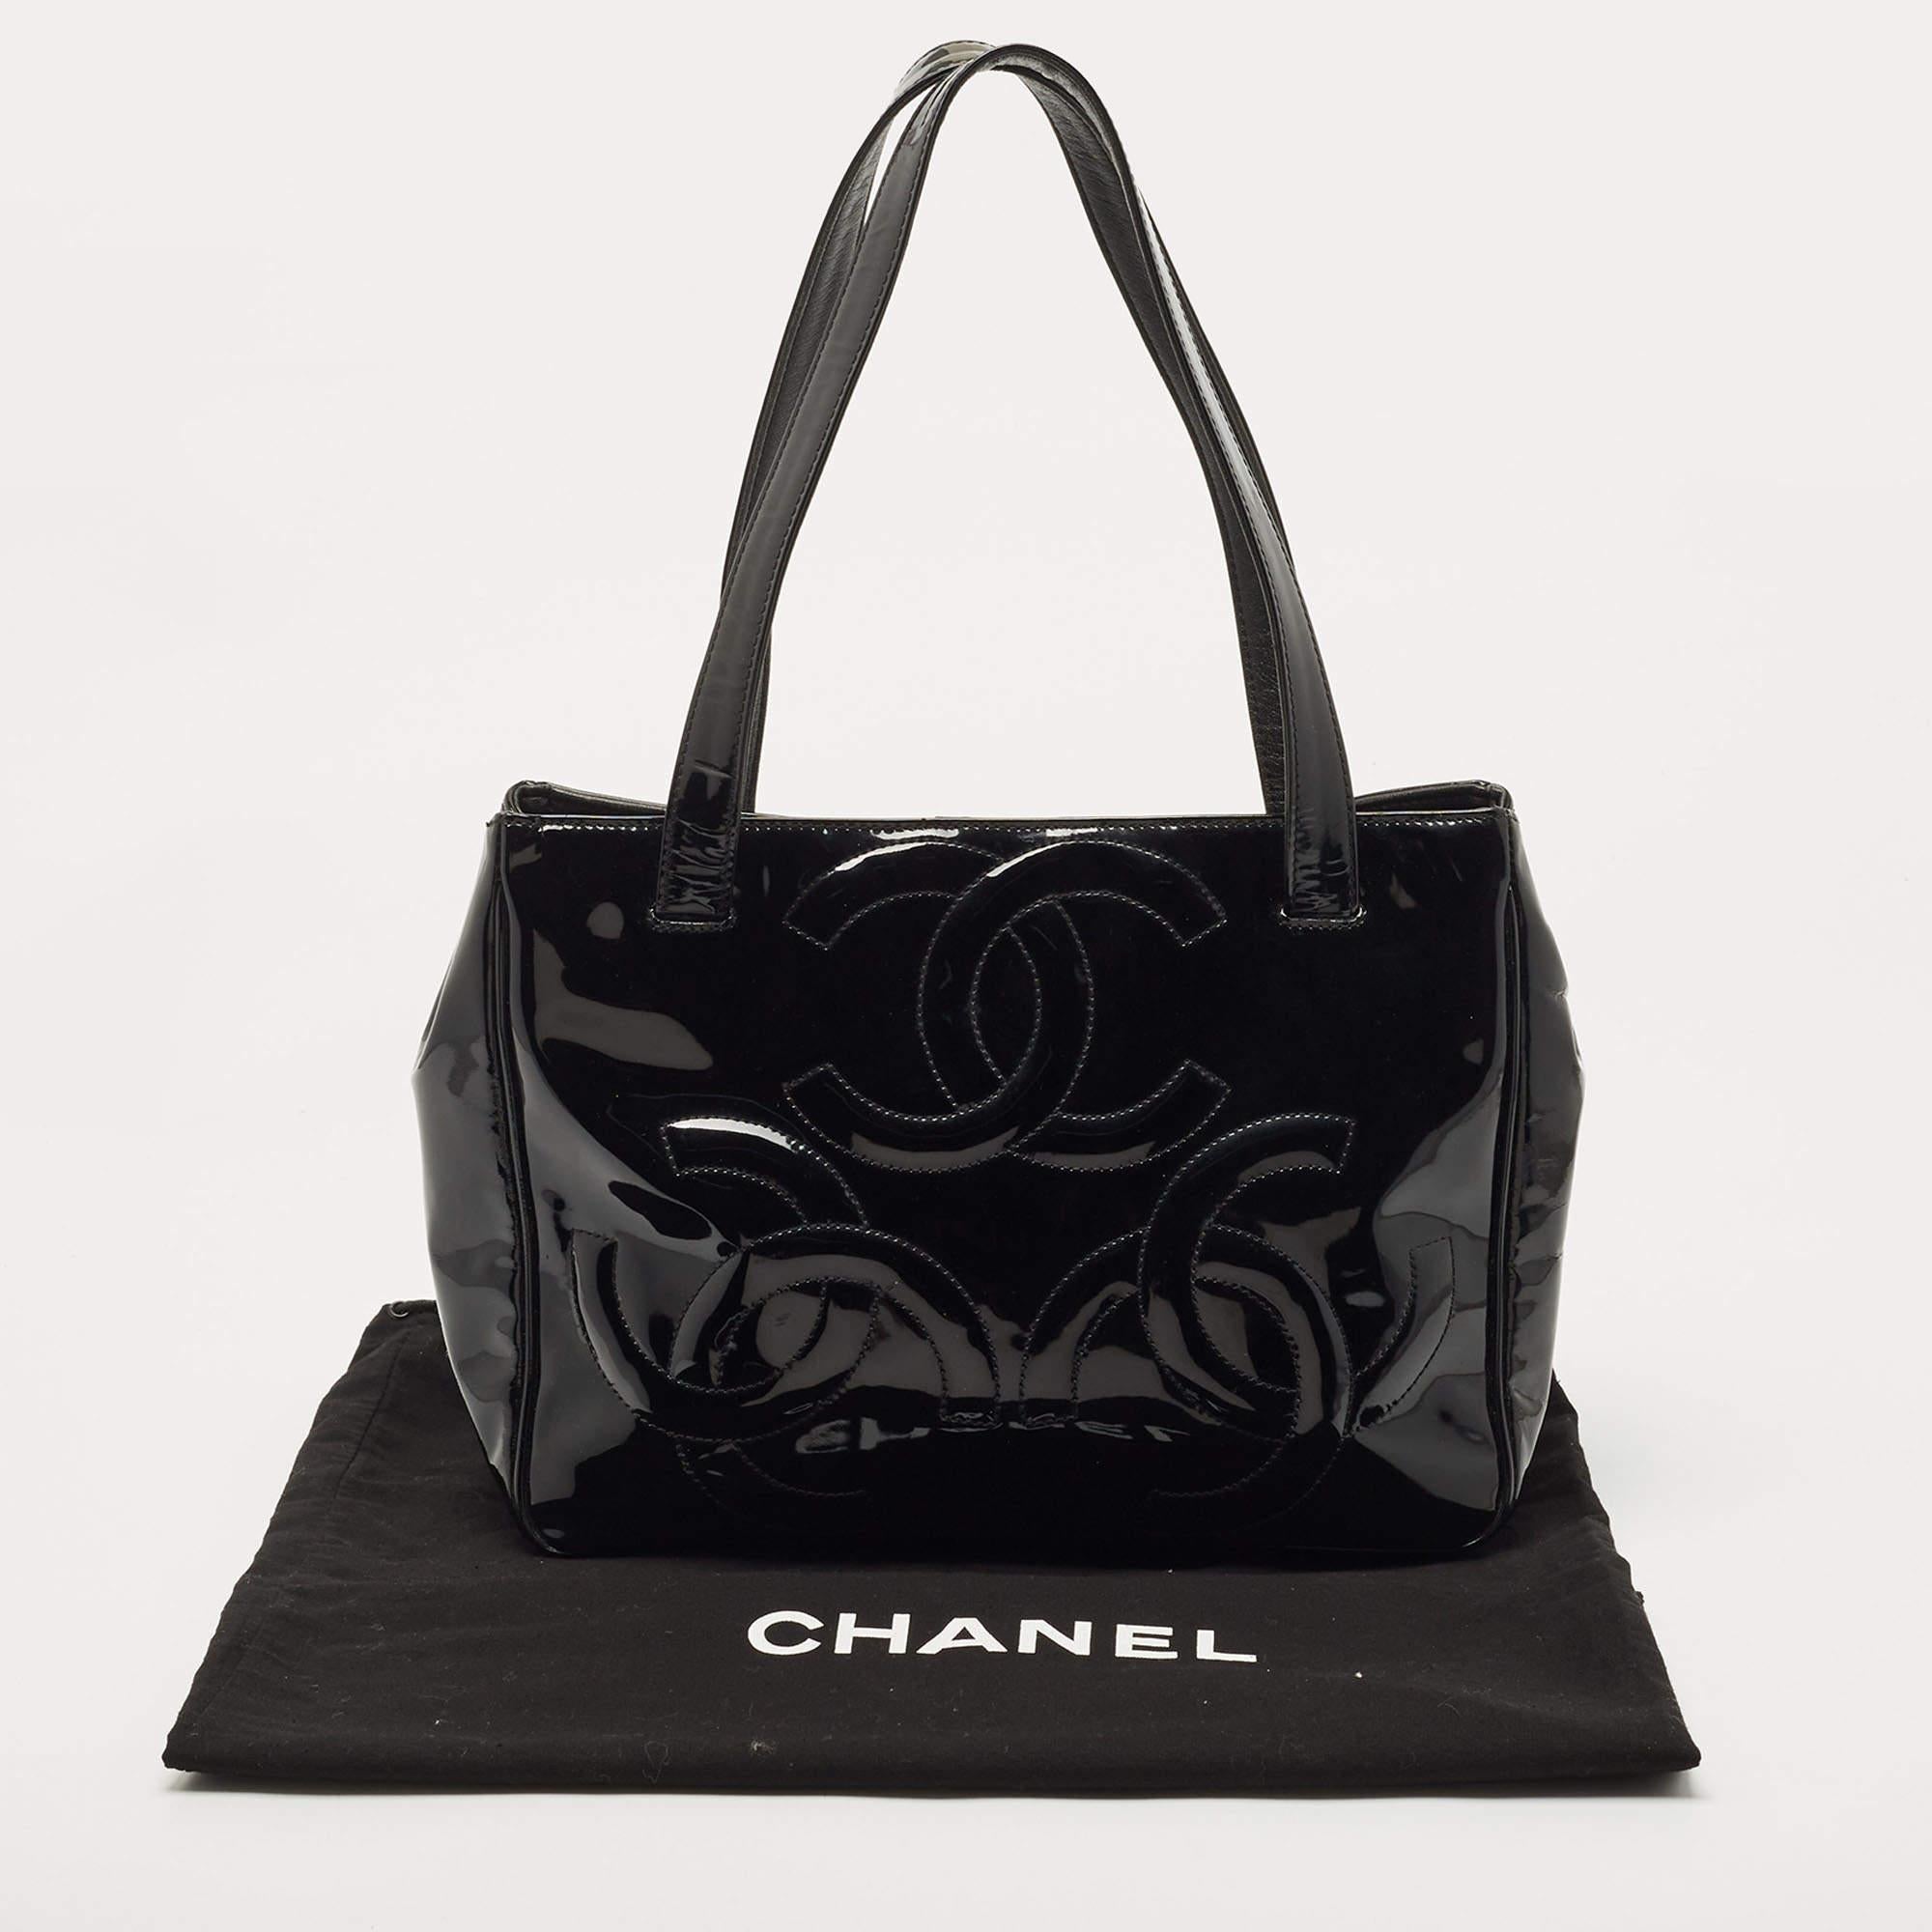 Chanel Black Patent Leather CC Tote 3